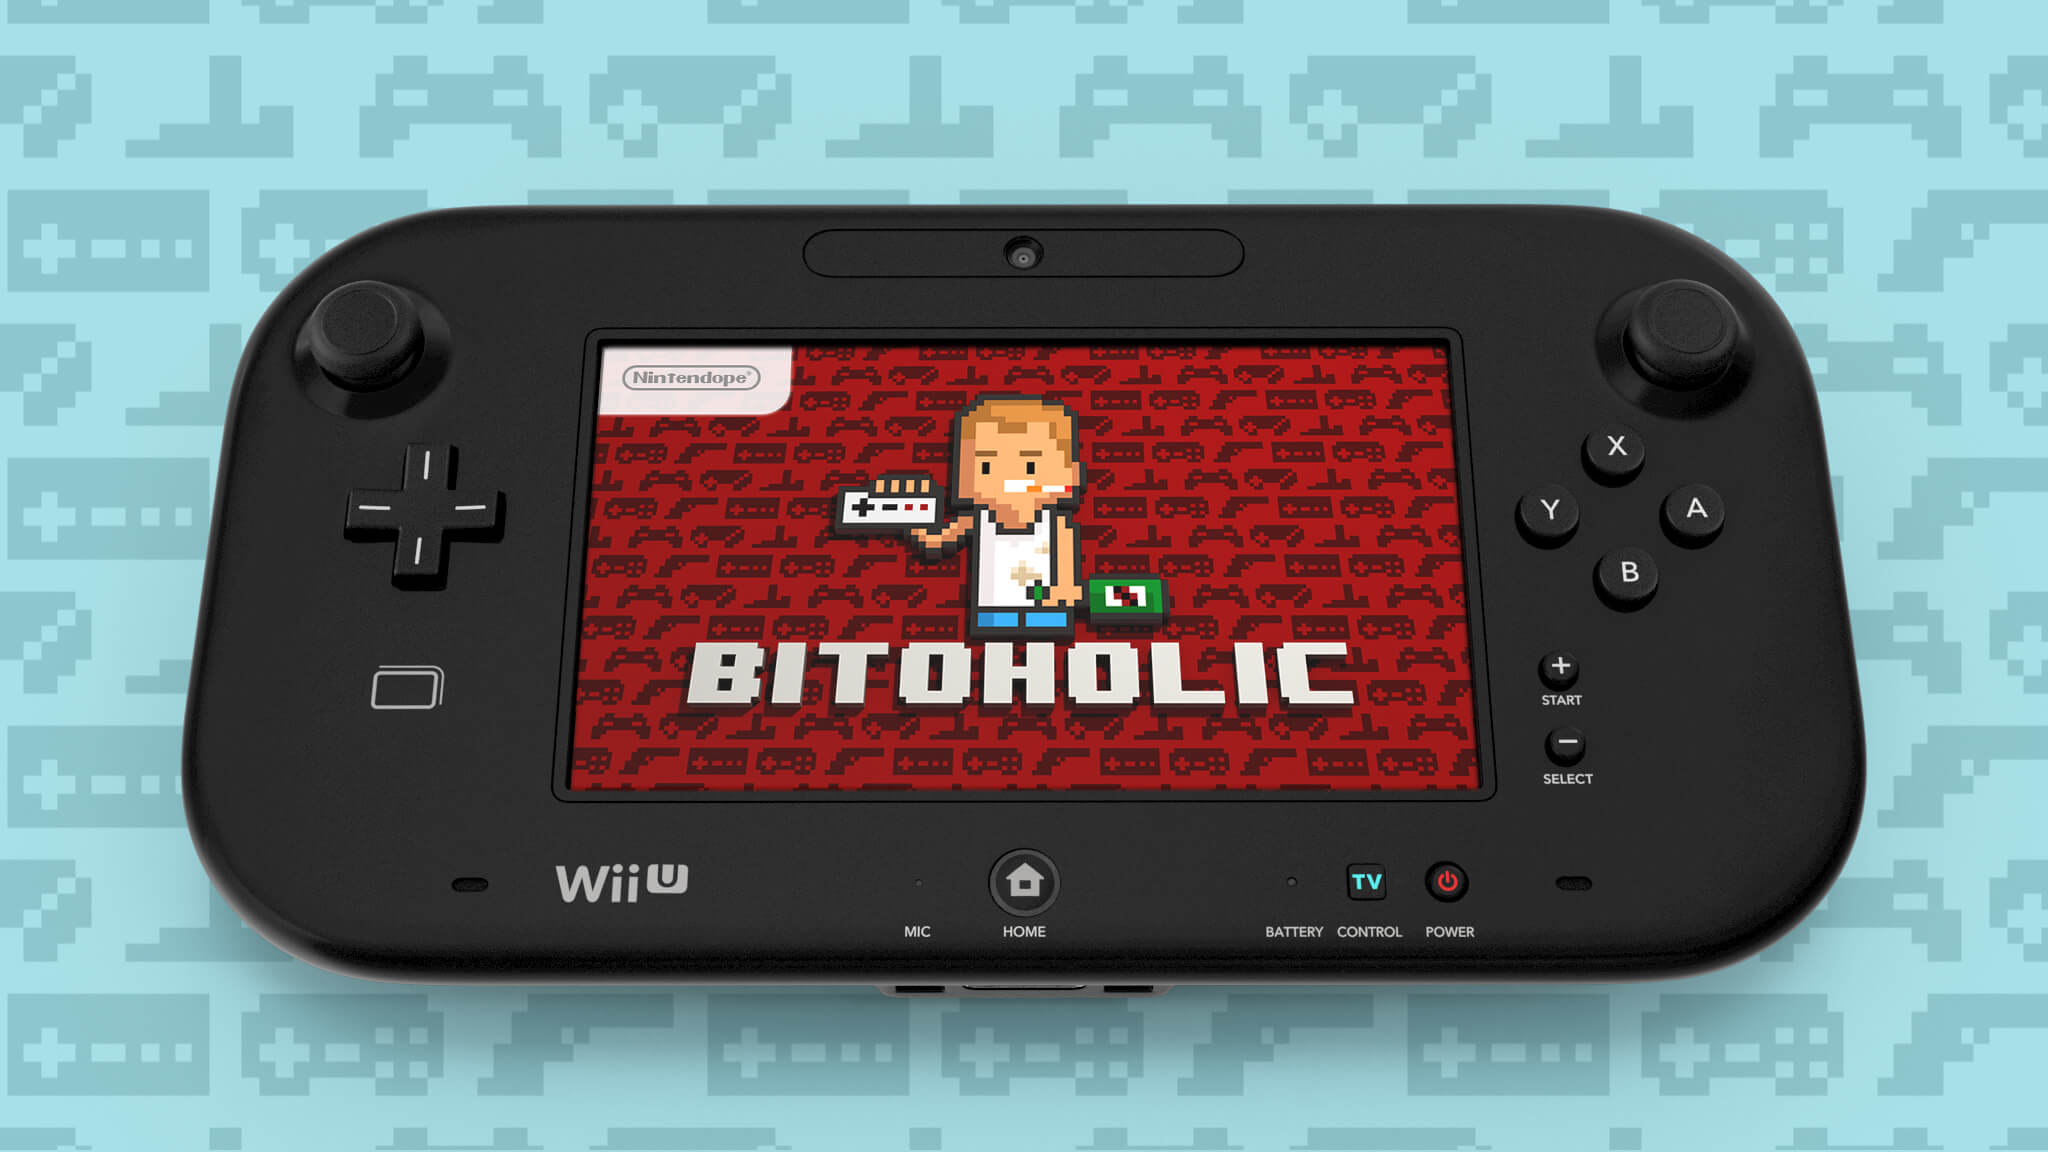 Bitholic grafik på Wii U gamepad